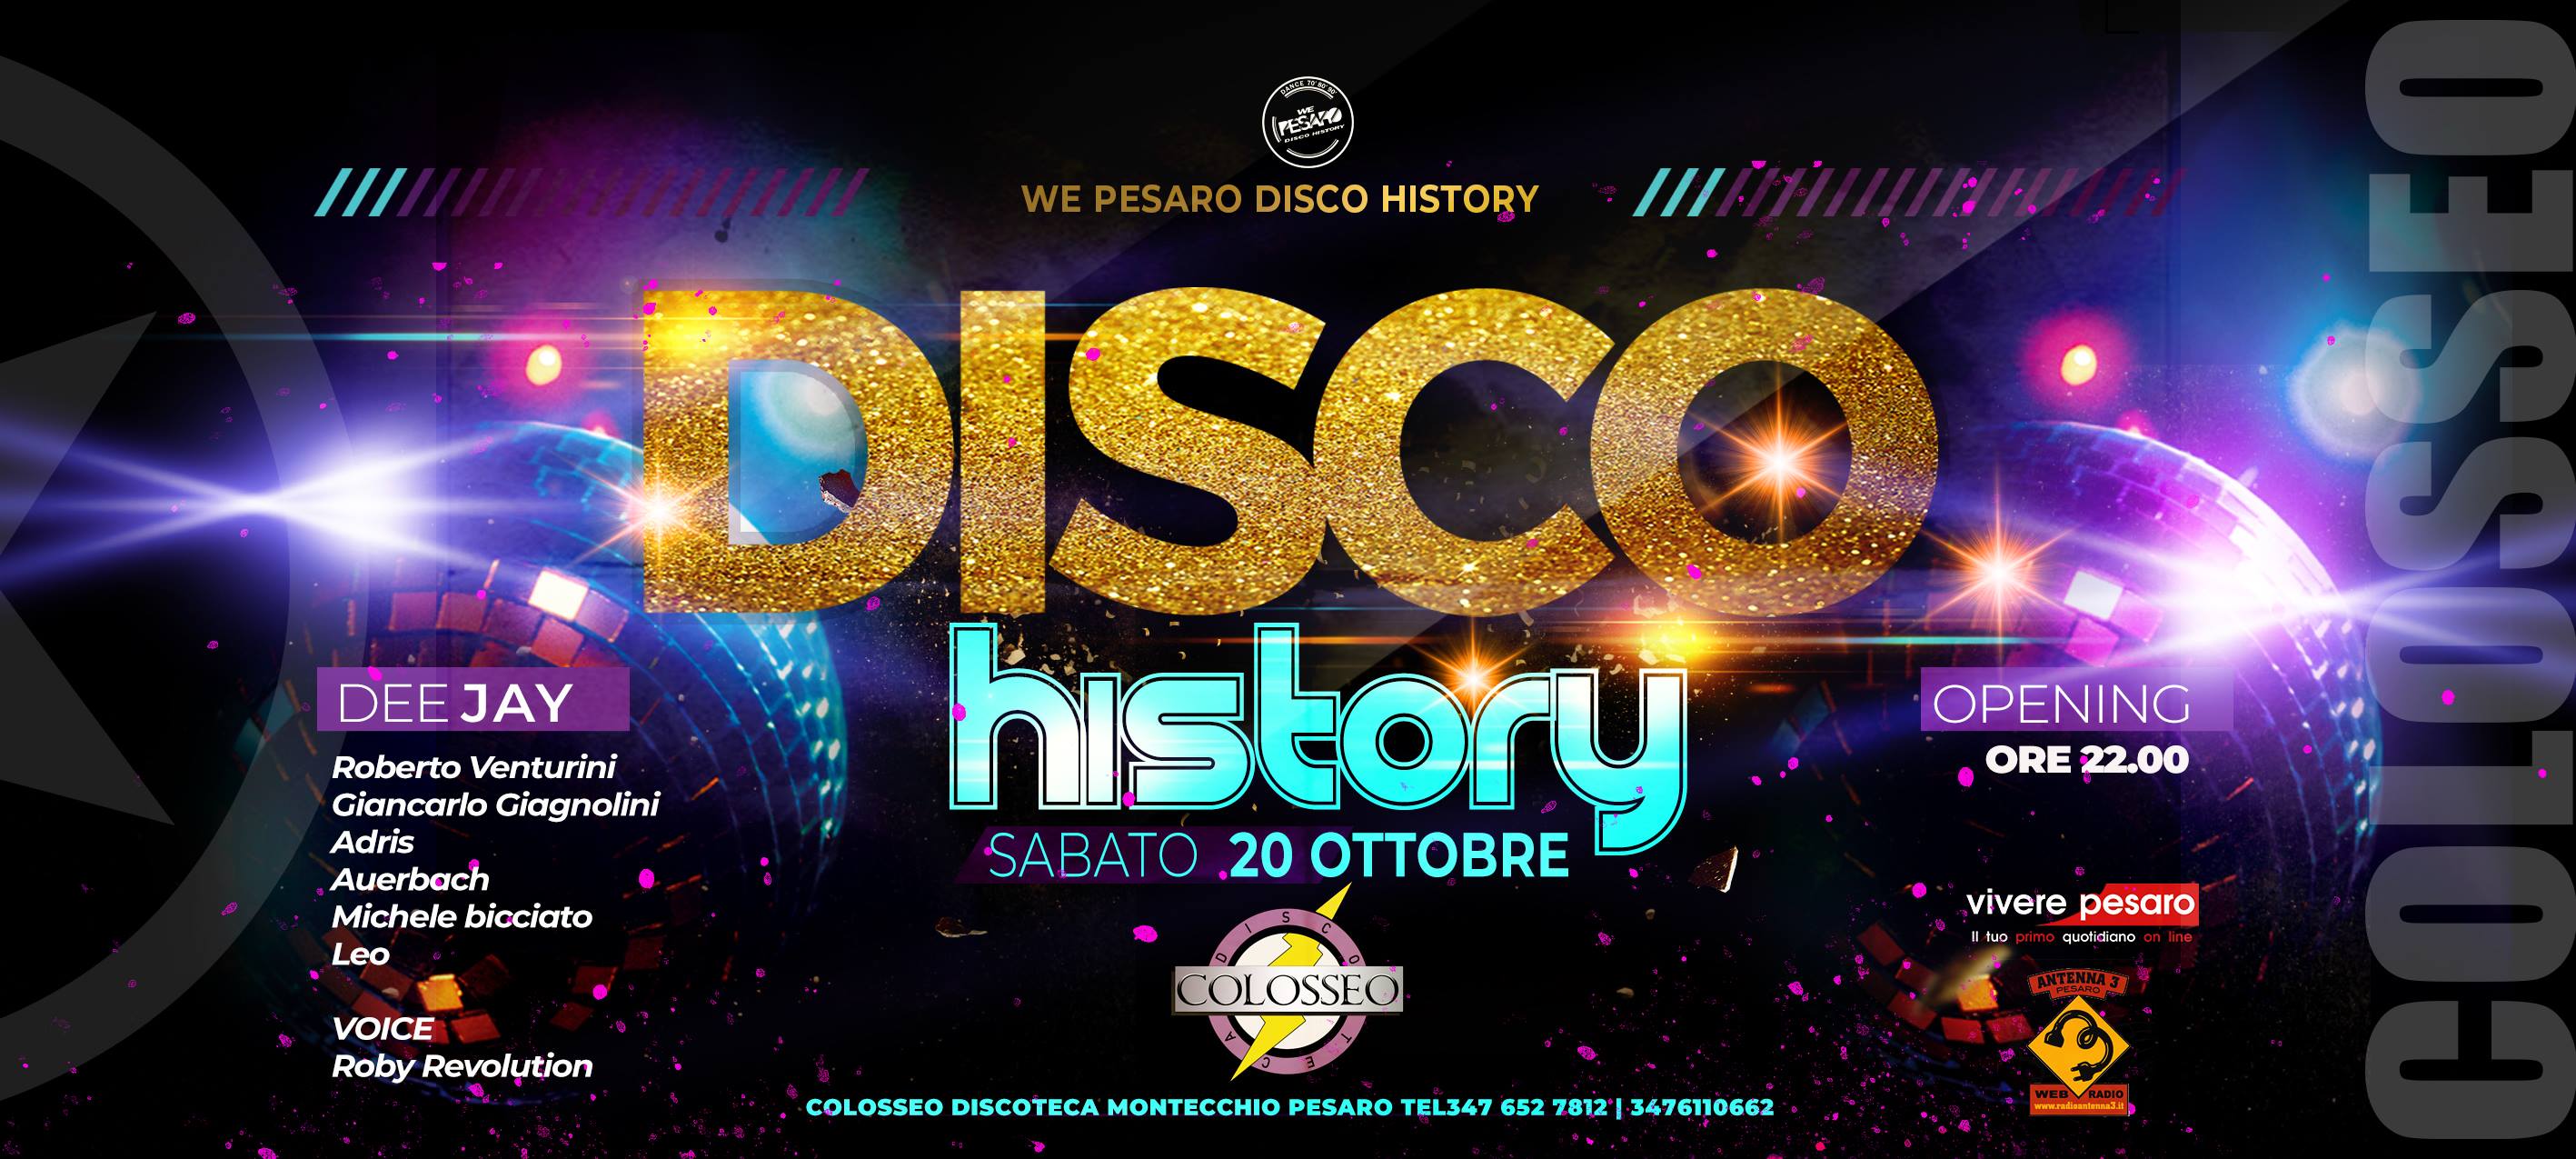 Disco History Discoteca Colosseo Montecchio